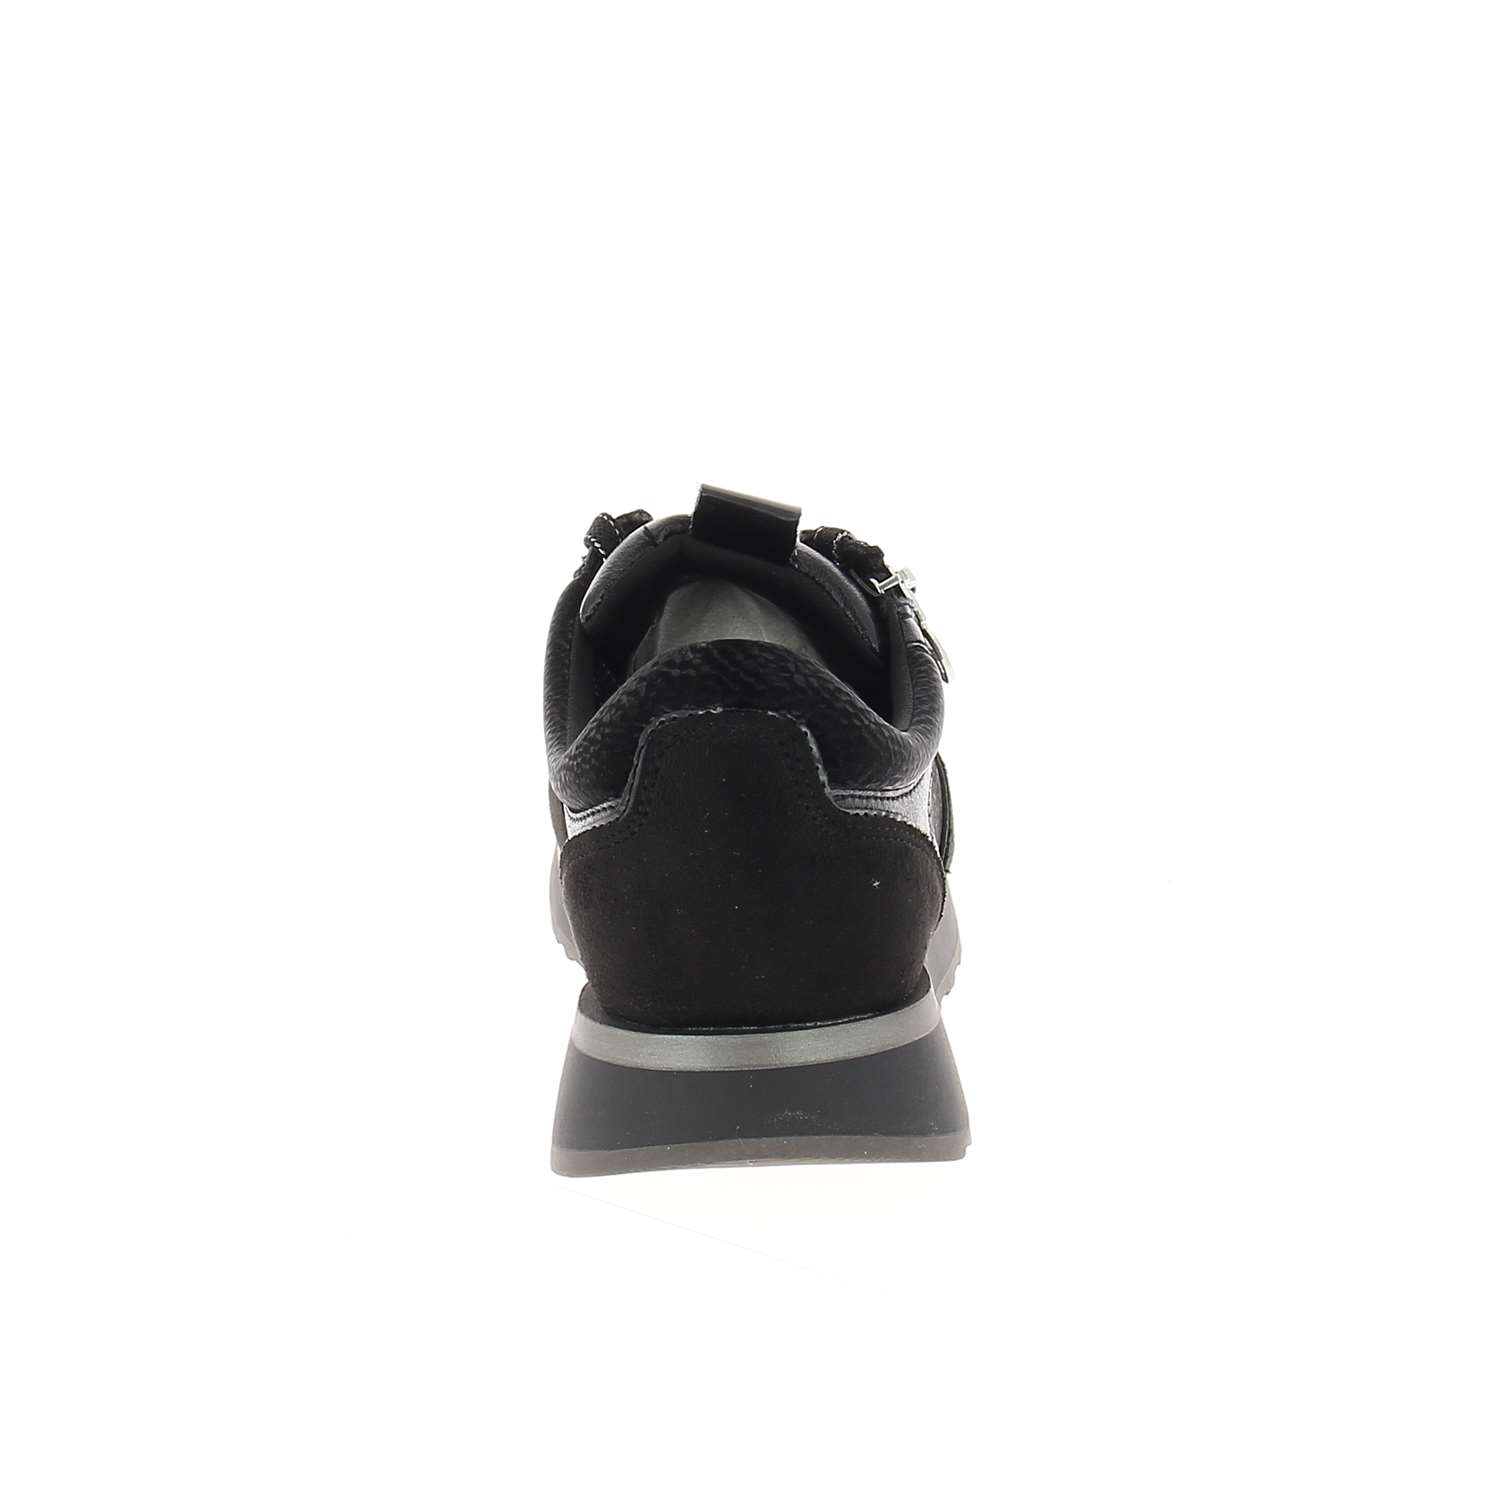 04 - TAREMO - TAMARIS - Chaussures à lacets - Synthétique